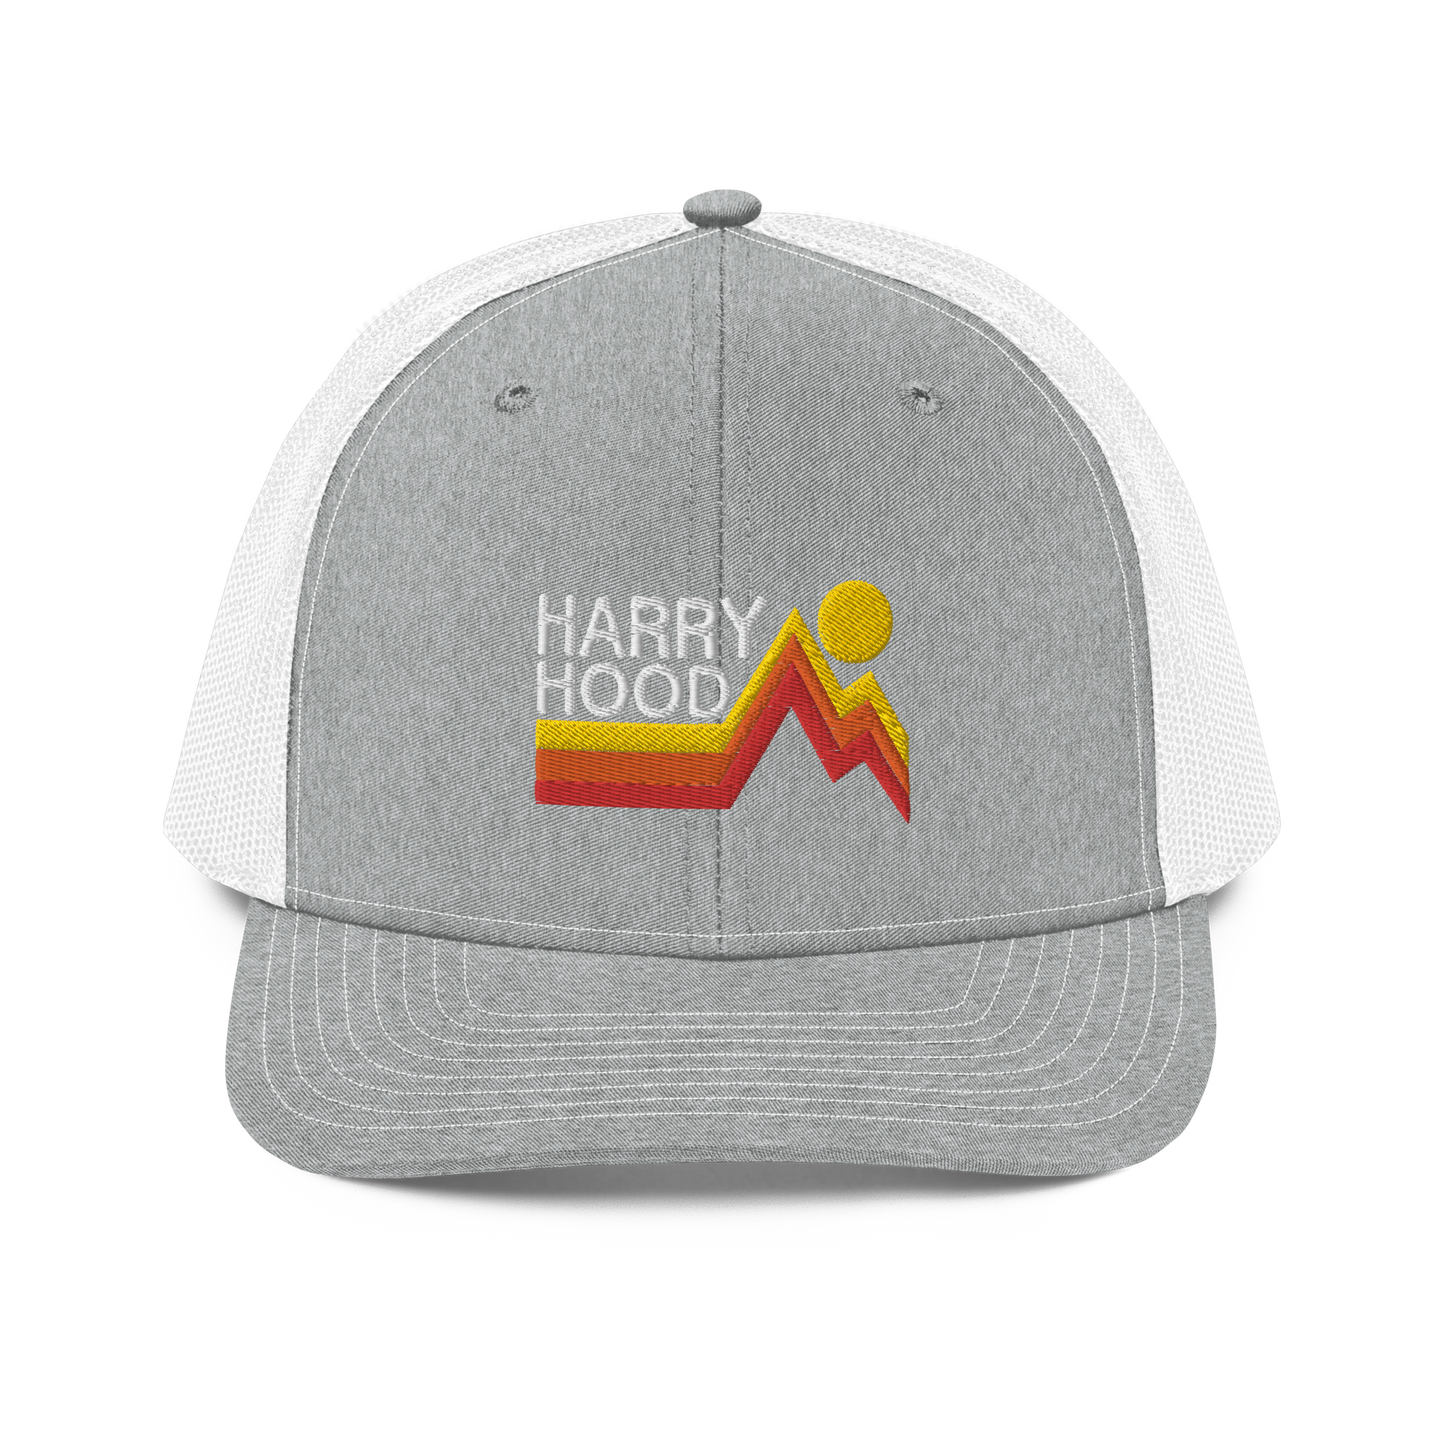 Harry Hood Embroidery 112 Snapback